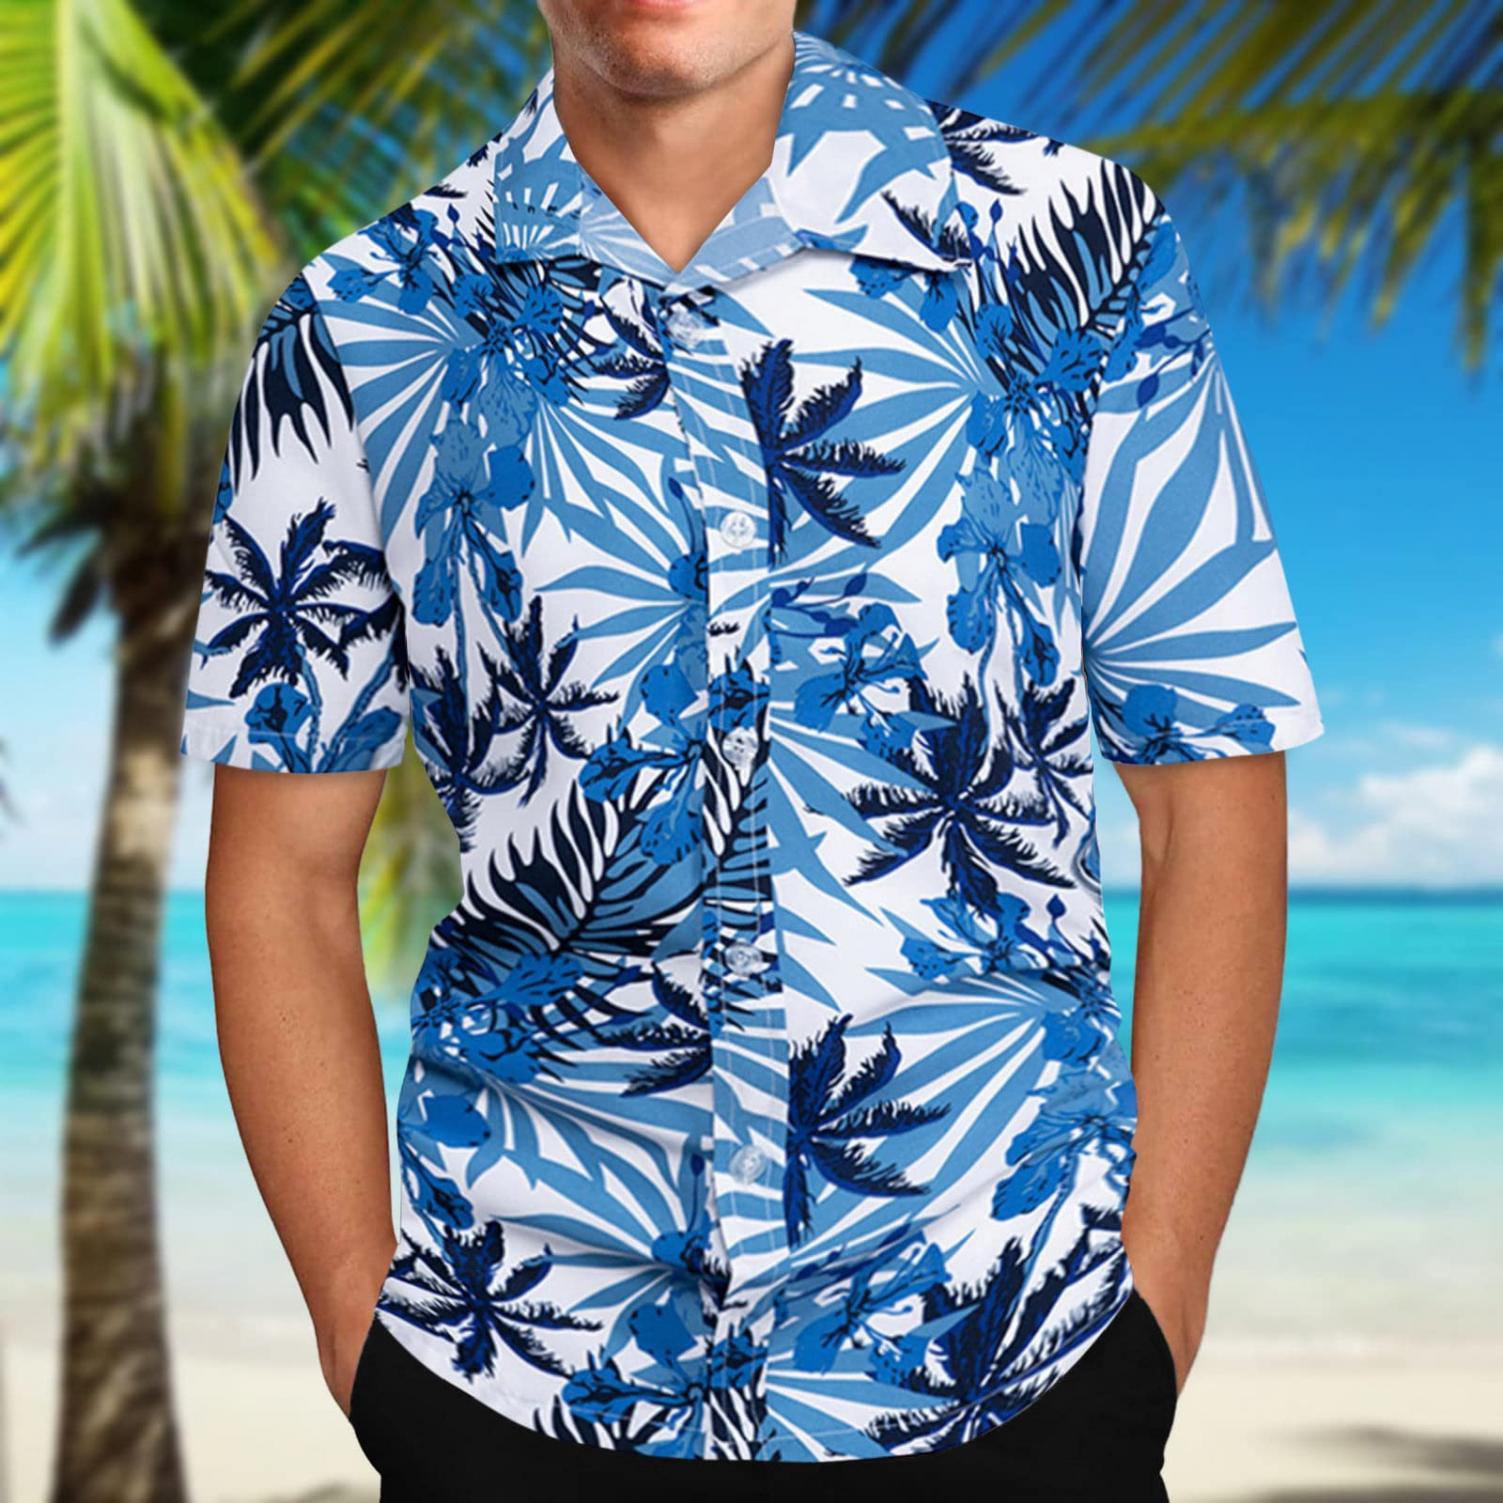 ELETOP Men's Hawaiian Shirt Quick Dry Tropical Aloha Shirts Short Sleeve Beach Holiday Casual Shirts L2 